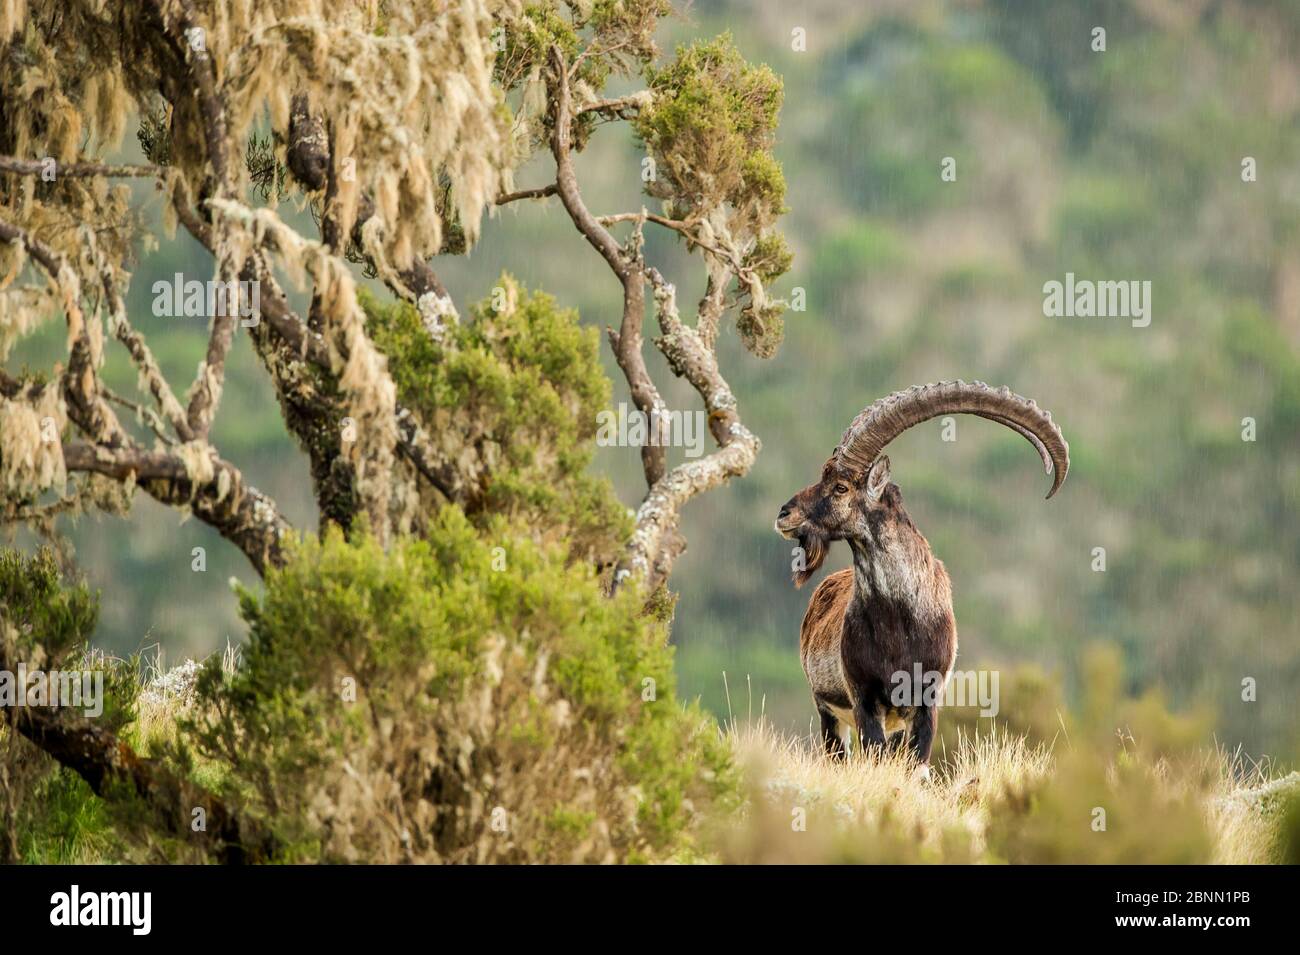 Walia ibex (Capra walie) in rocky landscape, Simien Mountains, Ethiopia. Stock Photo